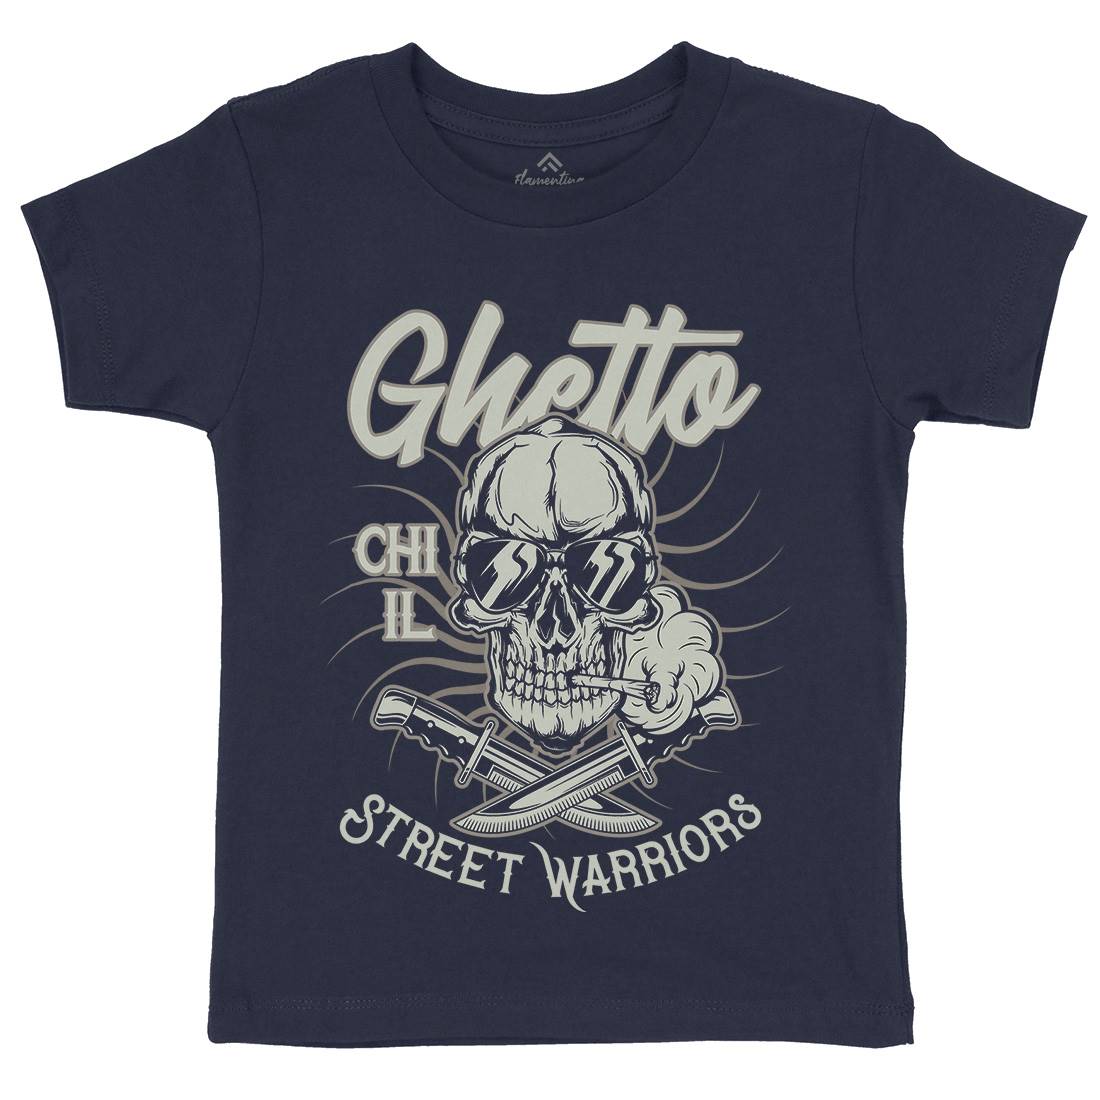 Ghetto Street Warriors Kids Organic Crew Neck T-Shirt Retro D937